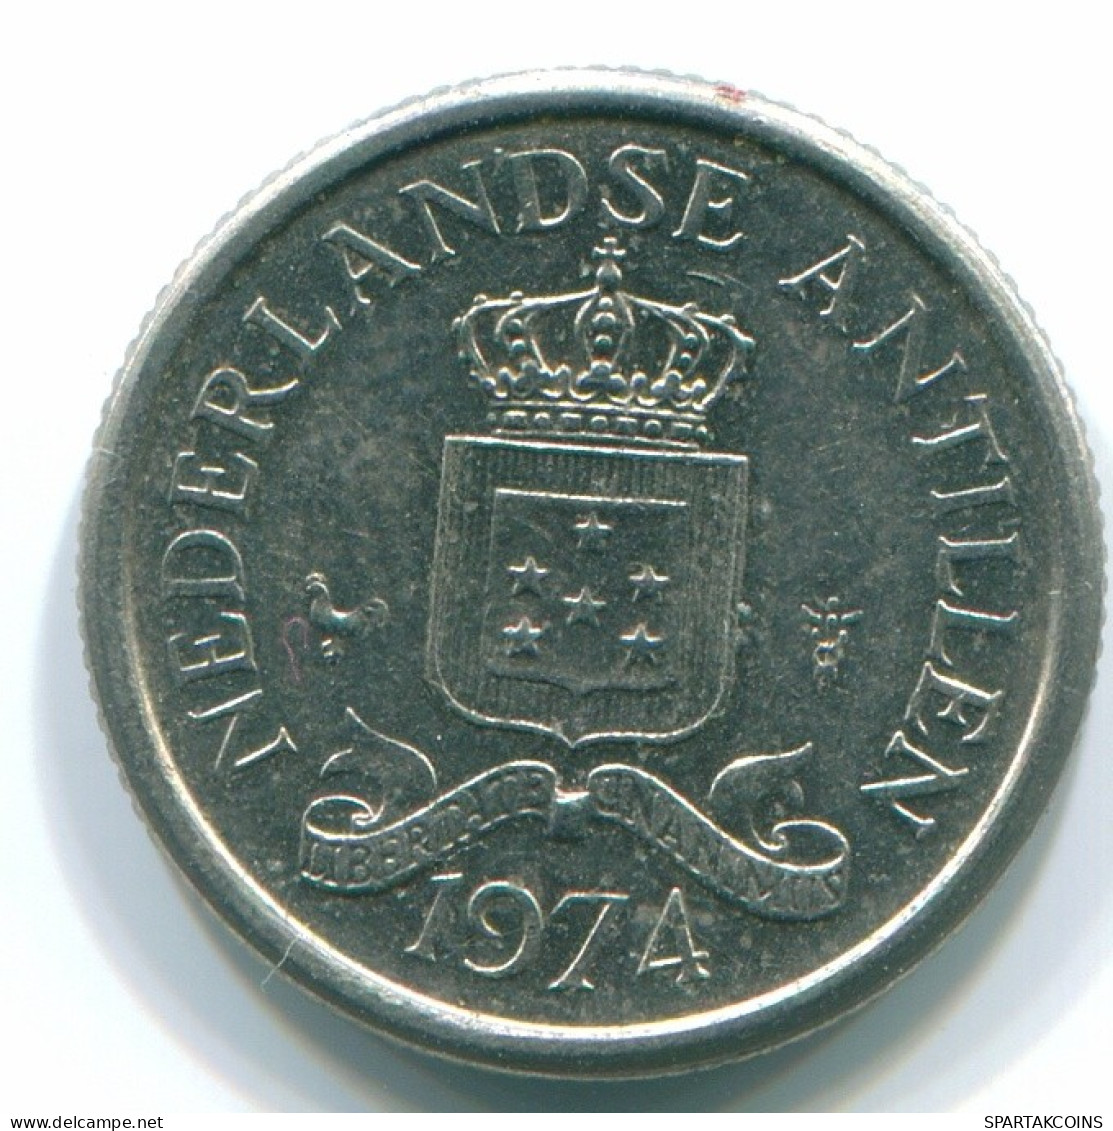 10 CENTS 1974 NETHERLANDS ANTILLES Nickel Colonial Coin #S13520.U.A - Nederlandse Antillen